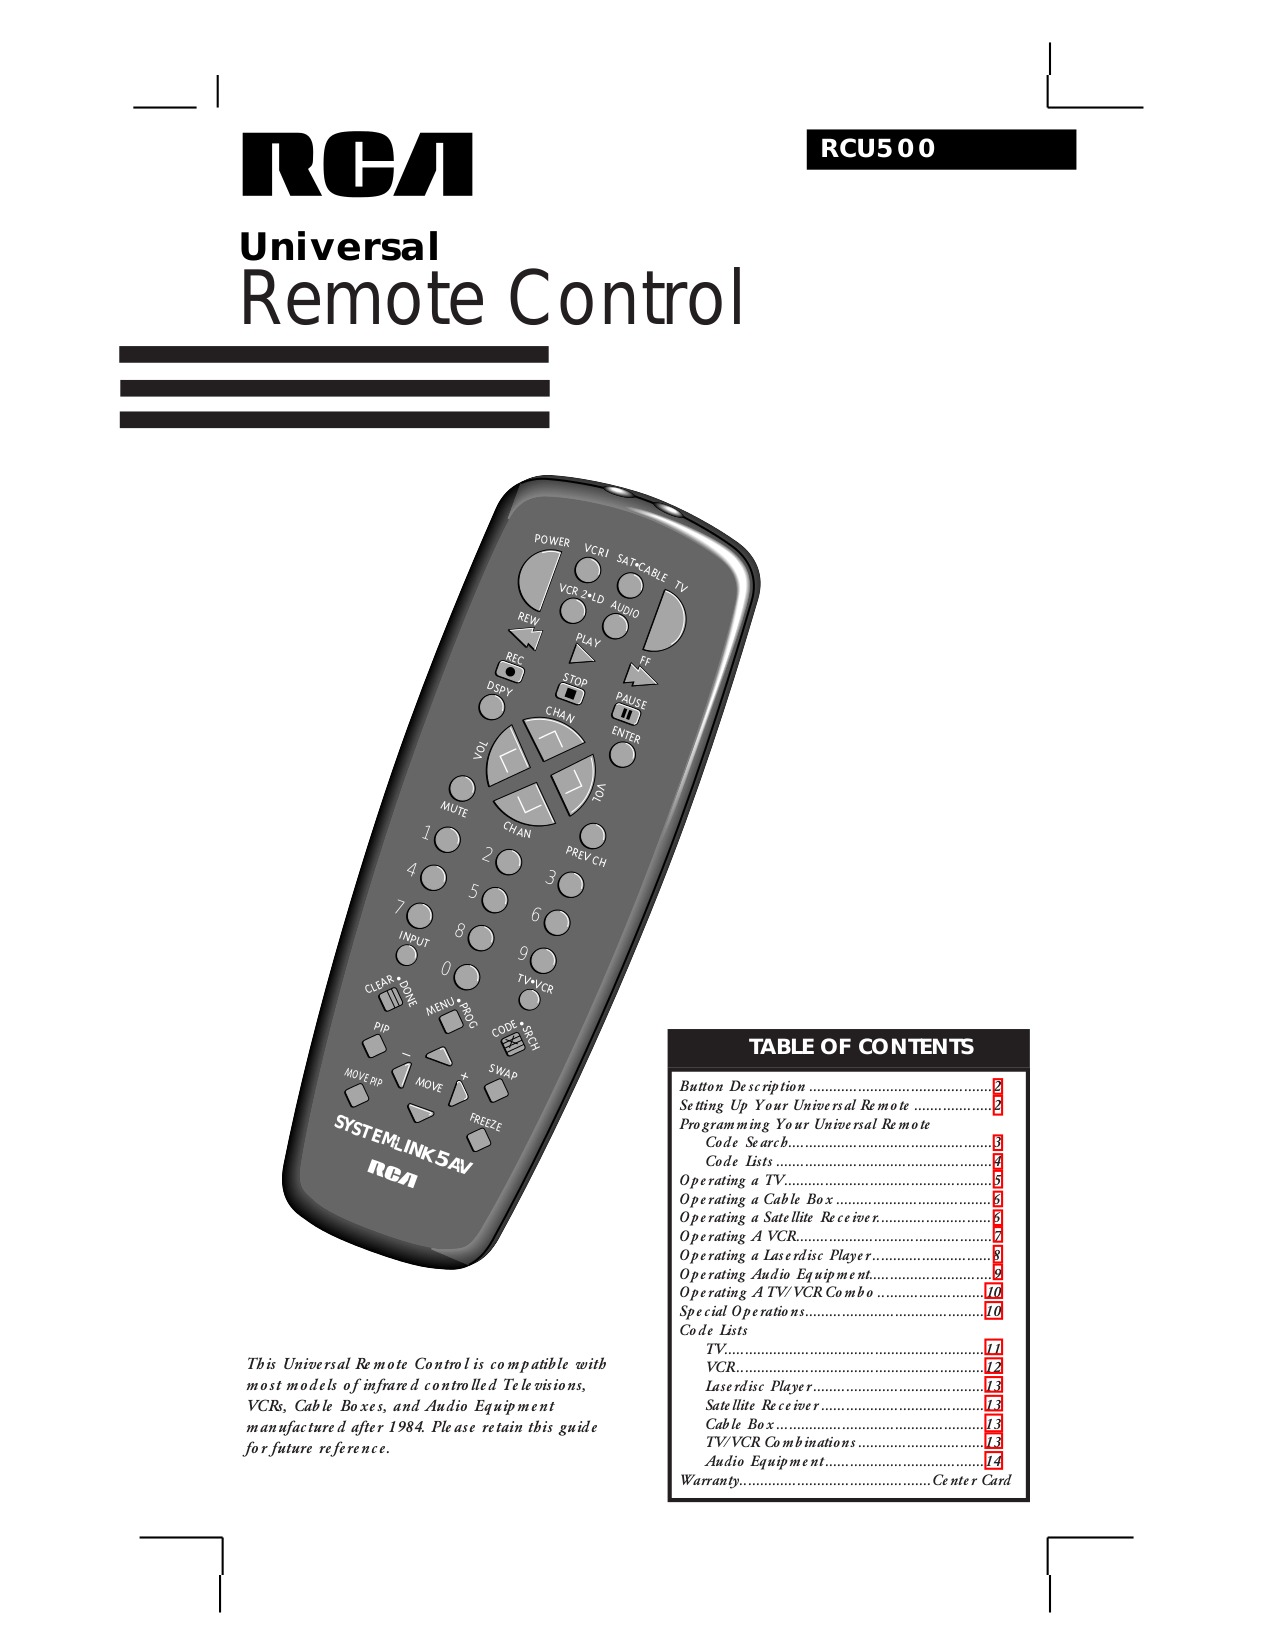 Gemini G401s Universal Remote Control Manual